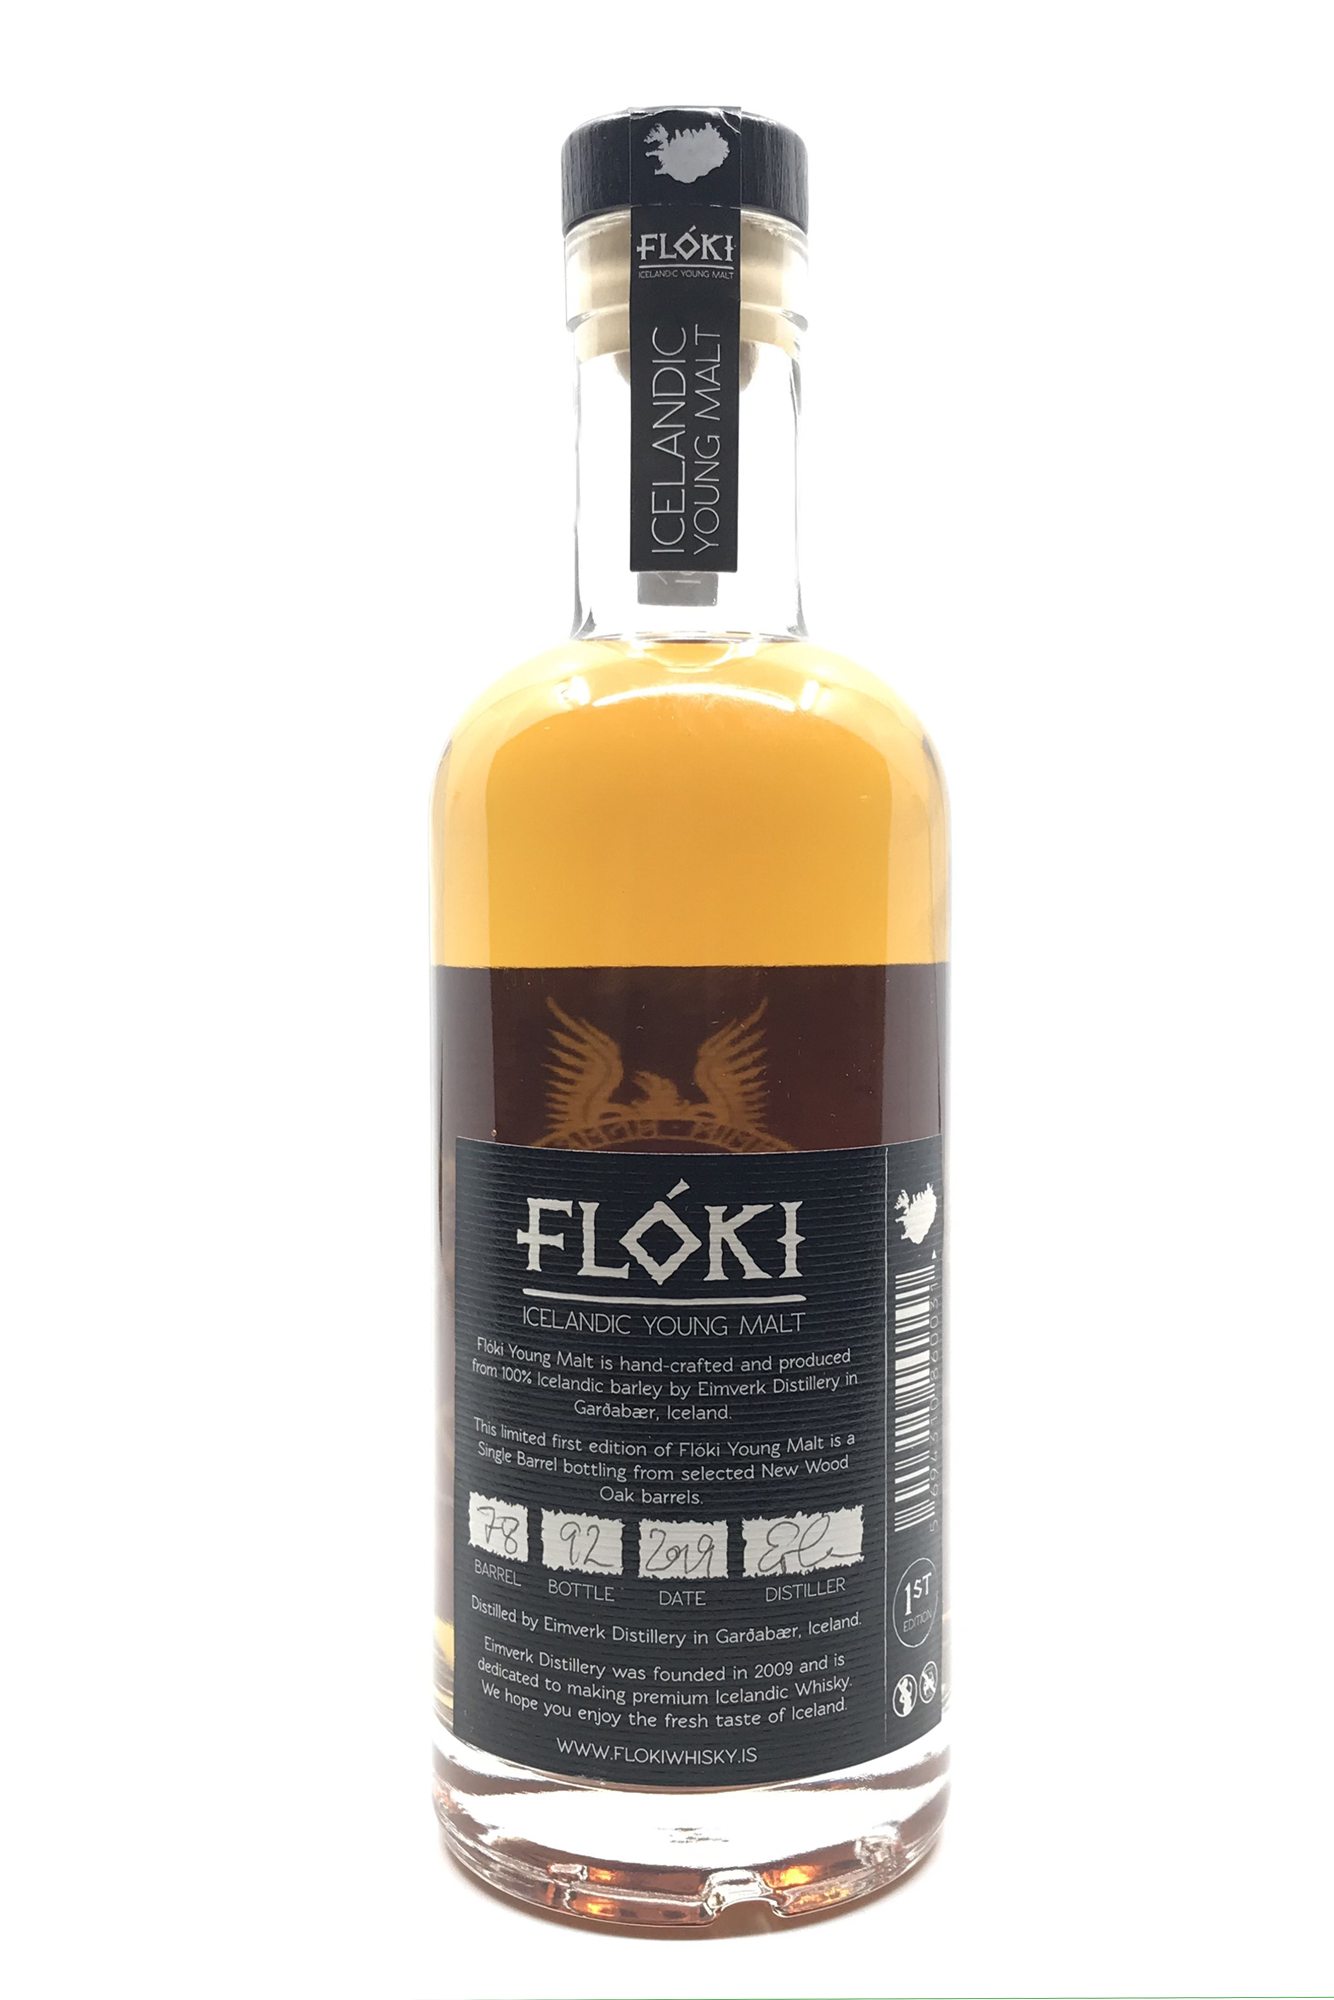 Floki Icelandic Young Malt Whisky - 47% vol. Alk. - 0,5l - Back